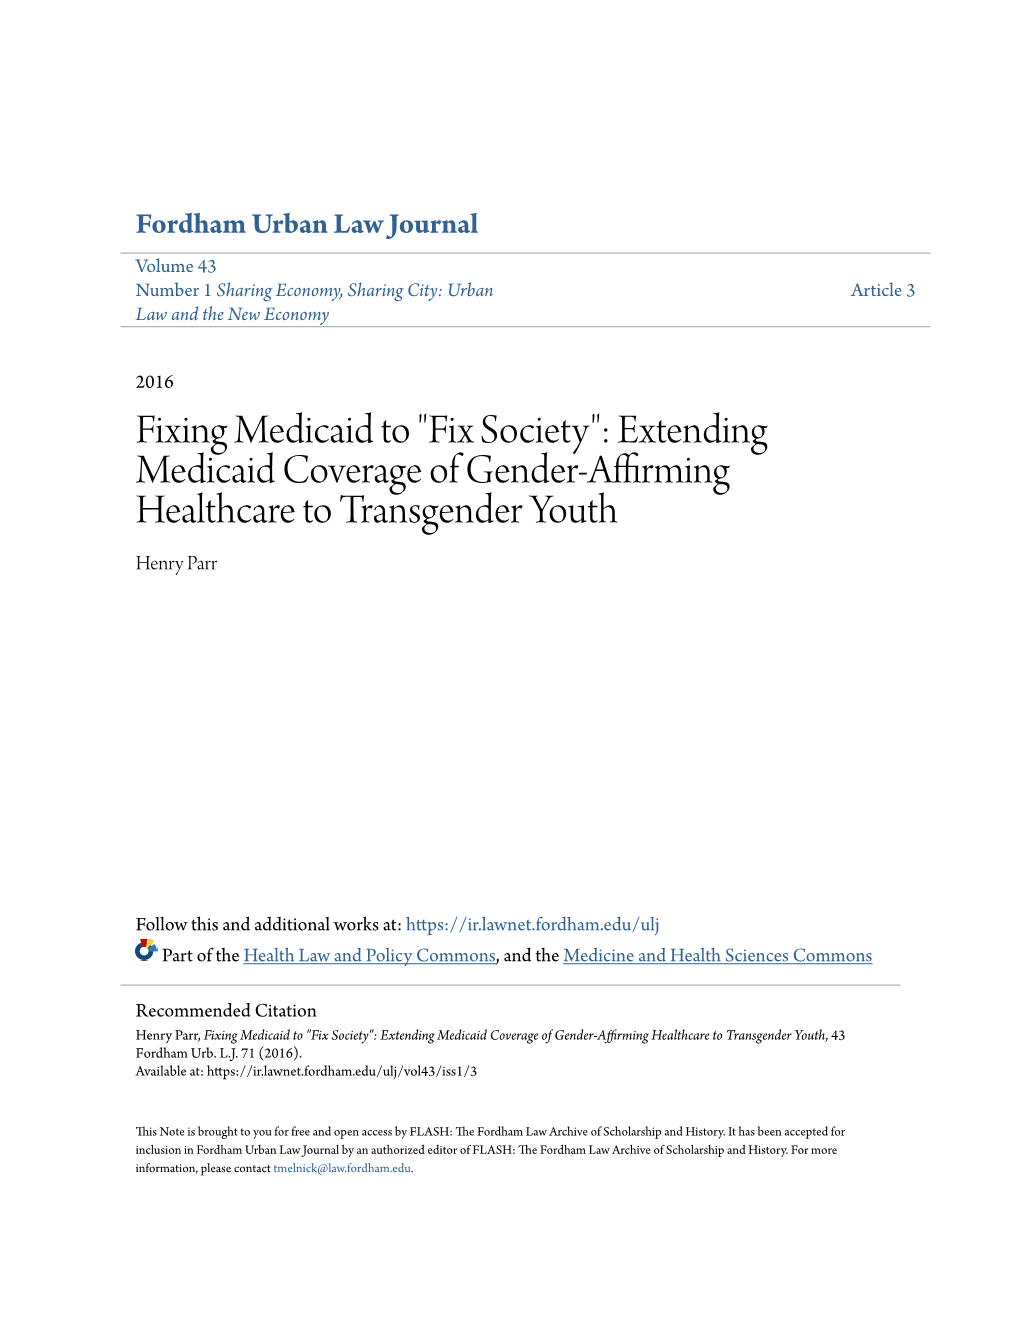 Extending Medicaid Coverage of Gender-Affirming Healthcare to Transgender Youth Henry Parr